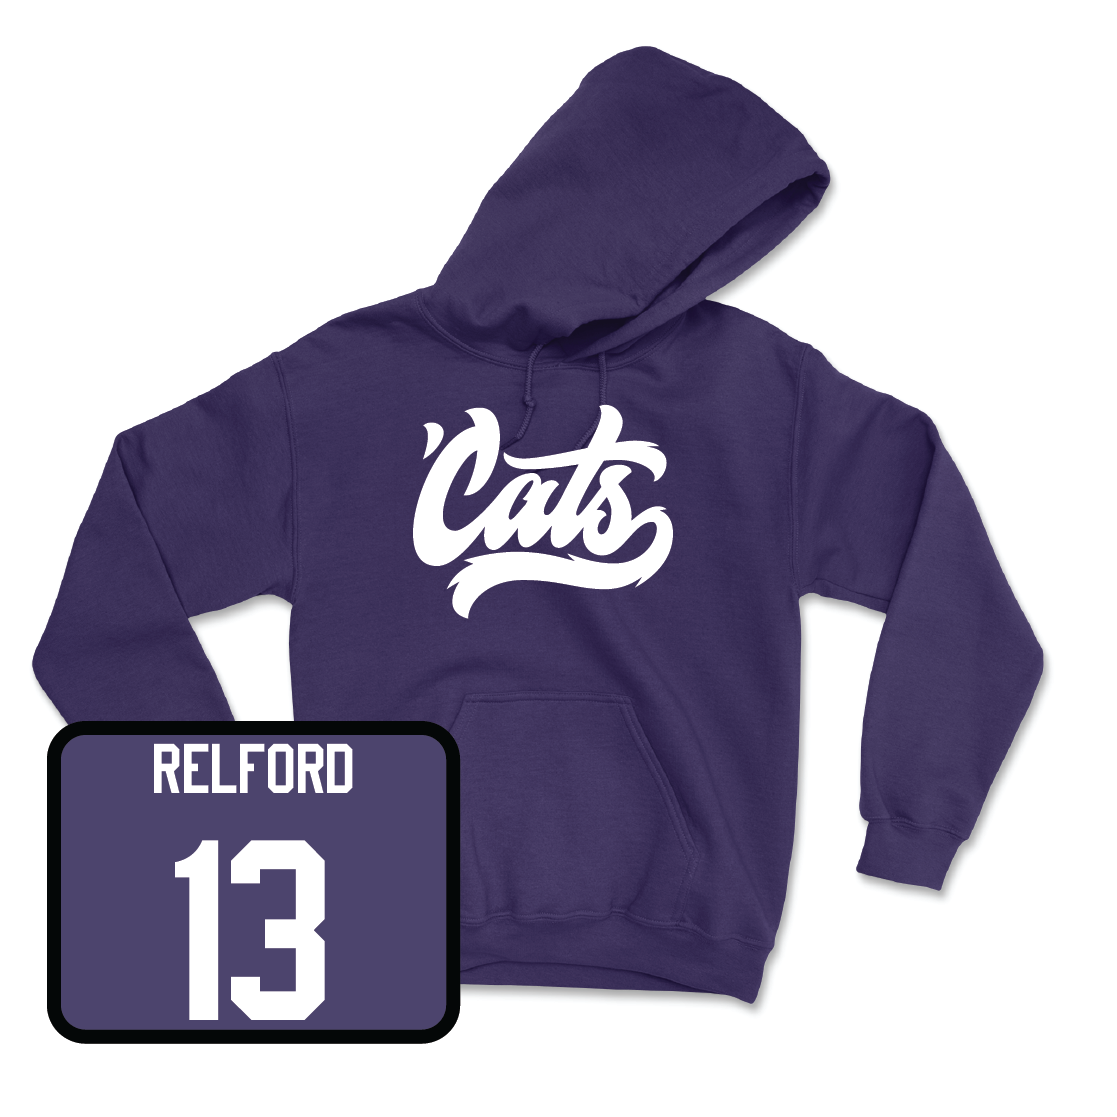 Purple Women's Field Hockey 'Cats Hoodie - Chloe Relford